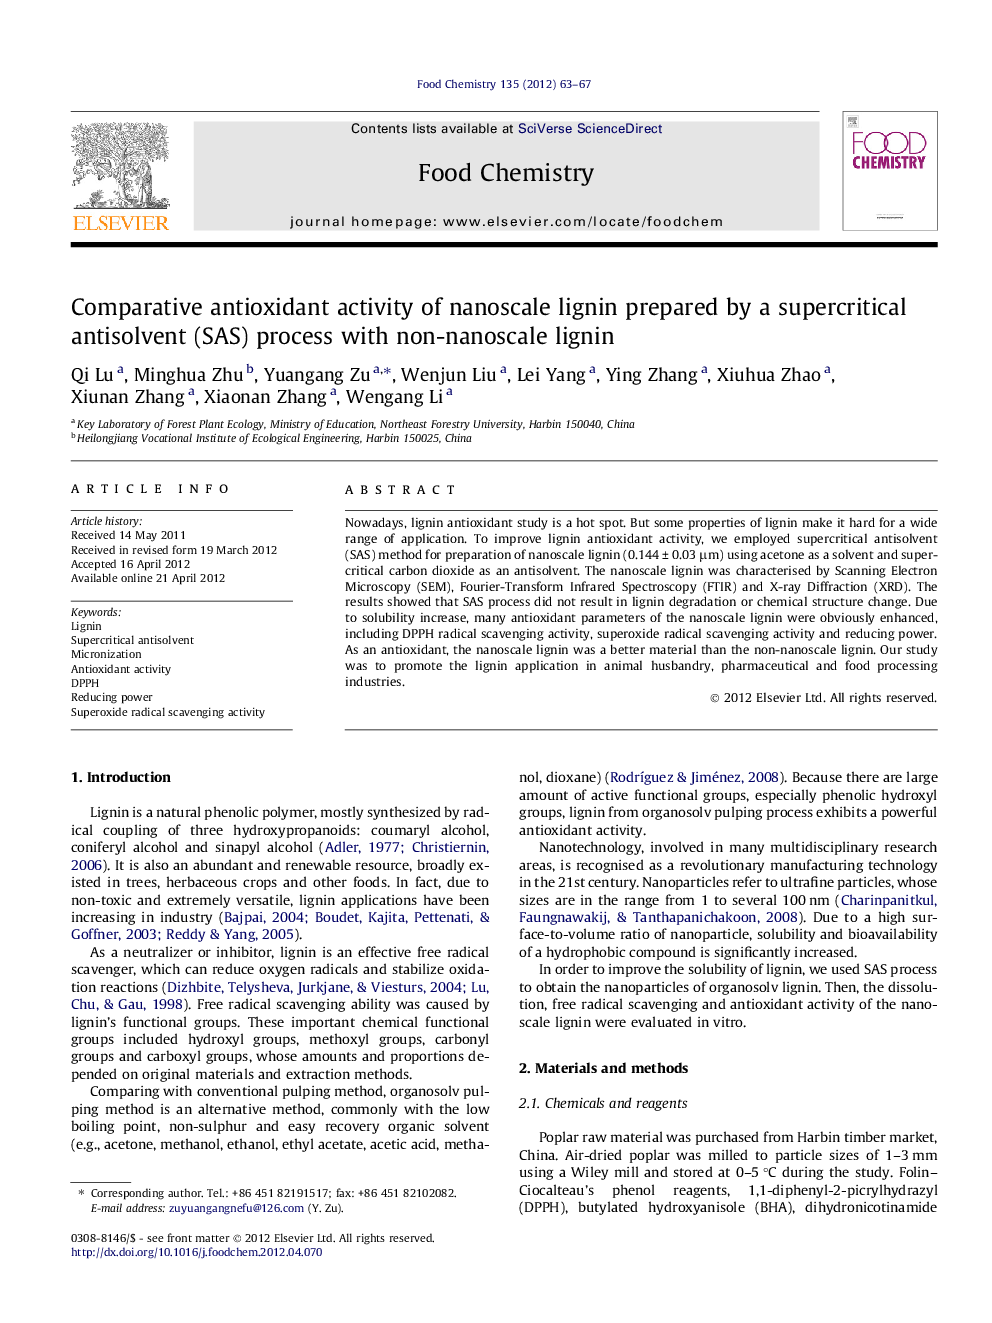 Comparative antioxidant activity of nanoscale lignin prepared by a supercritical antisolvent (SAS) process with non-nanoscale lignin